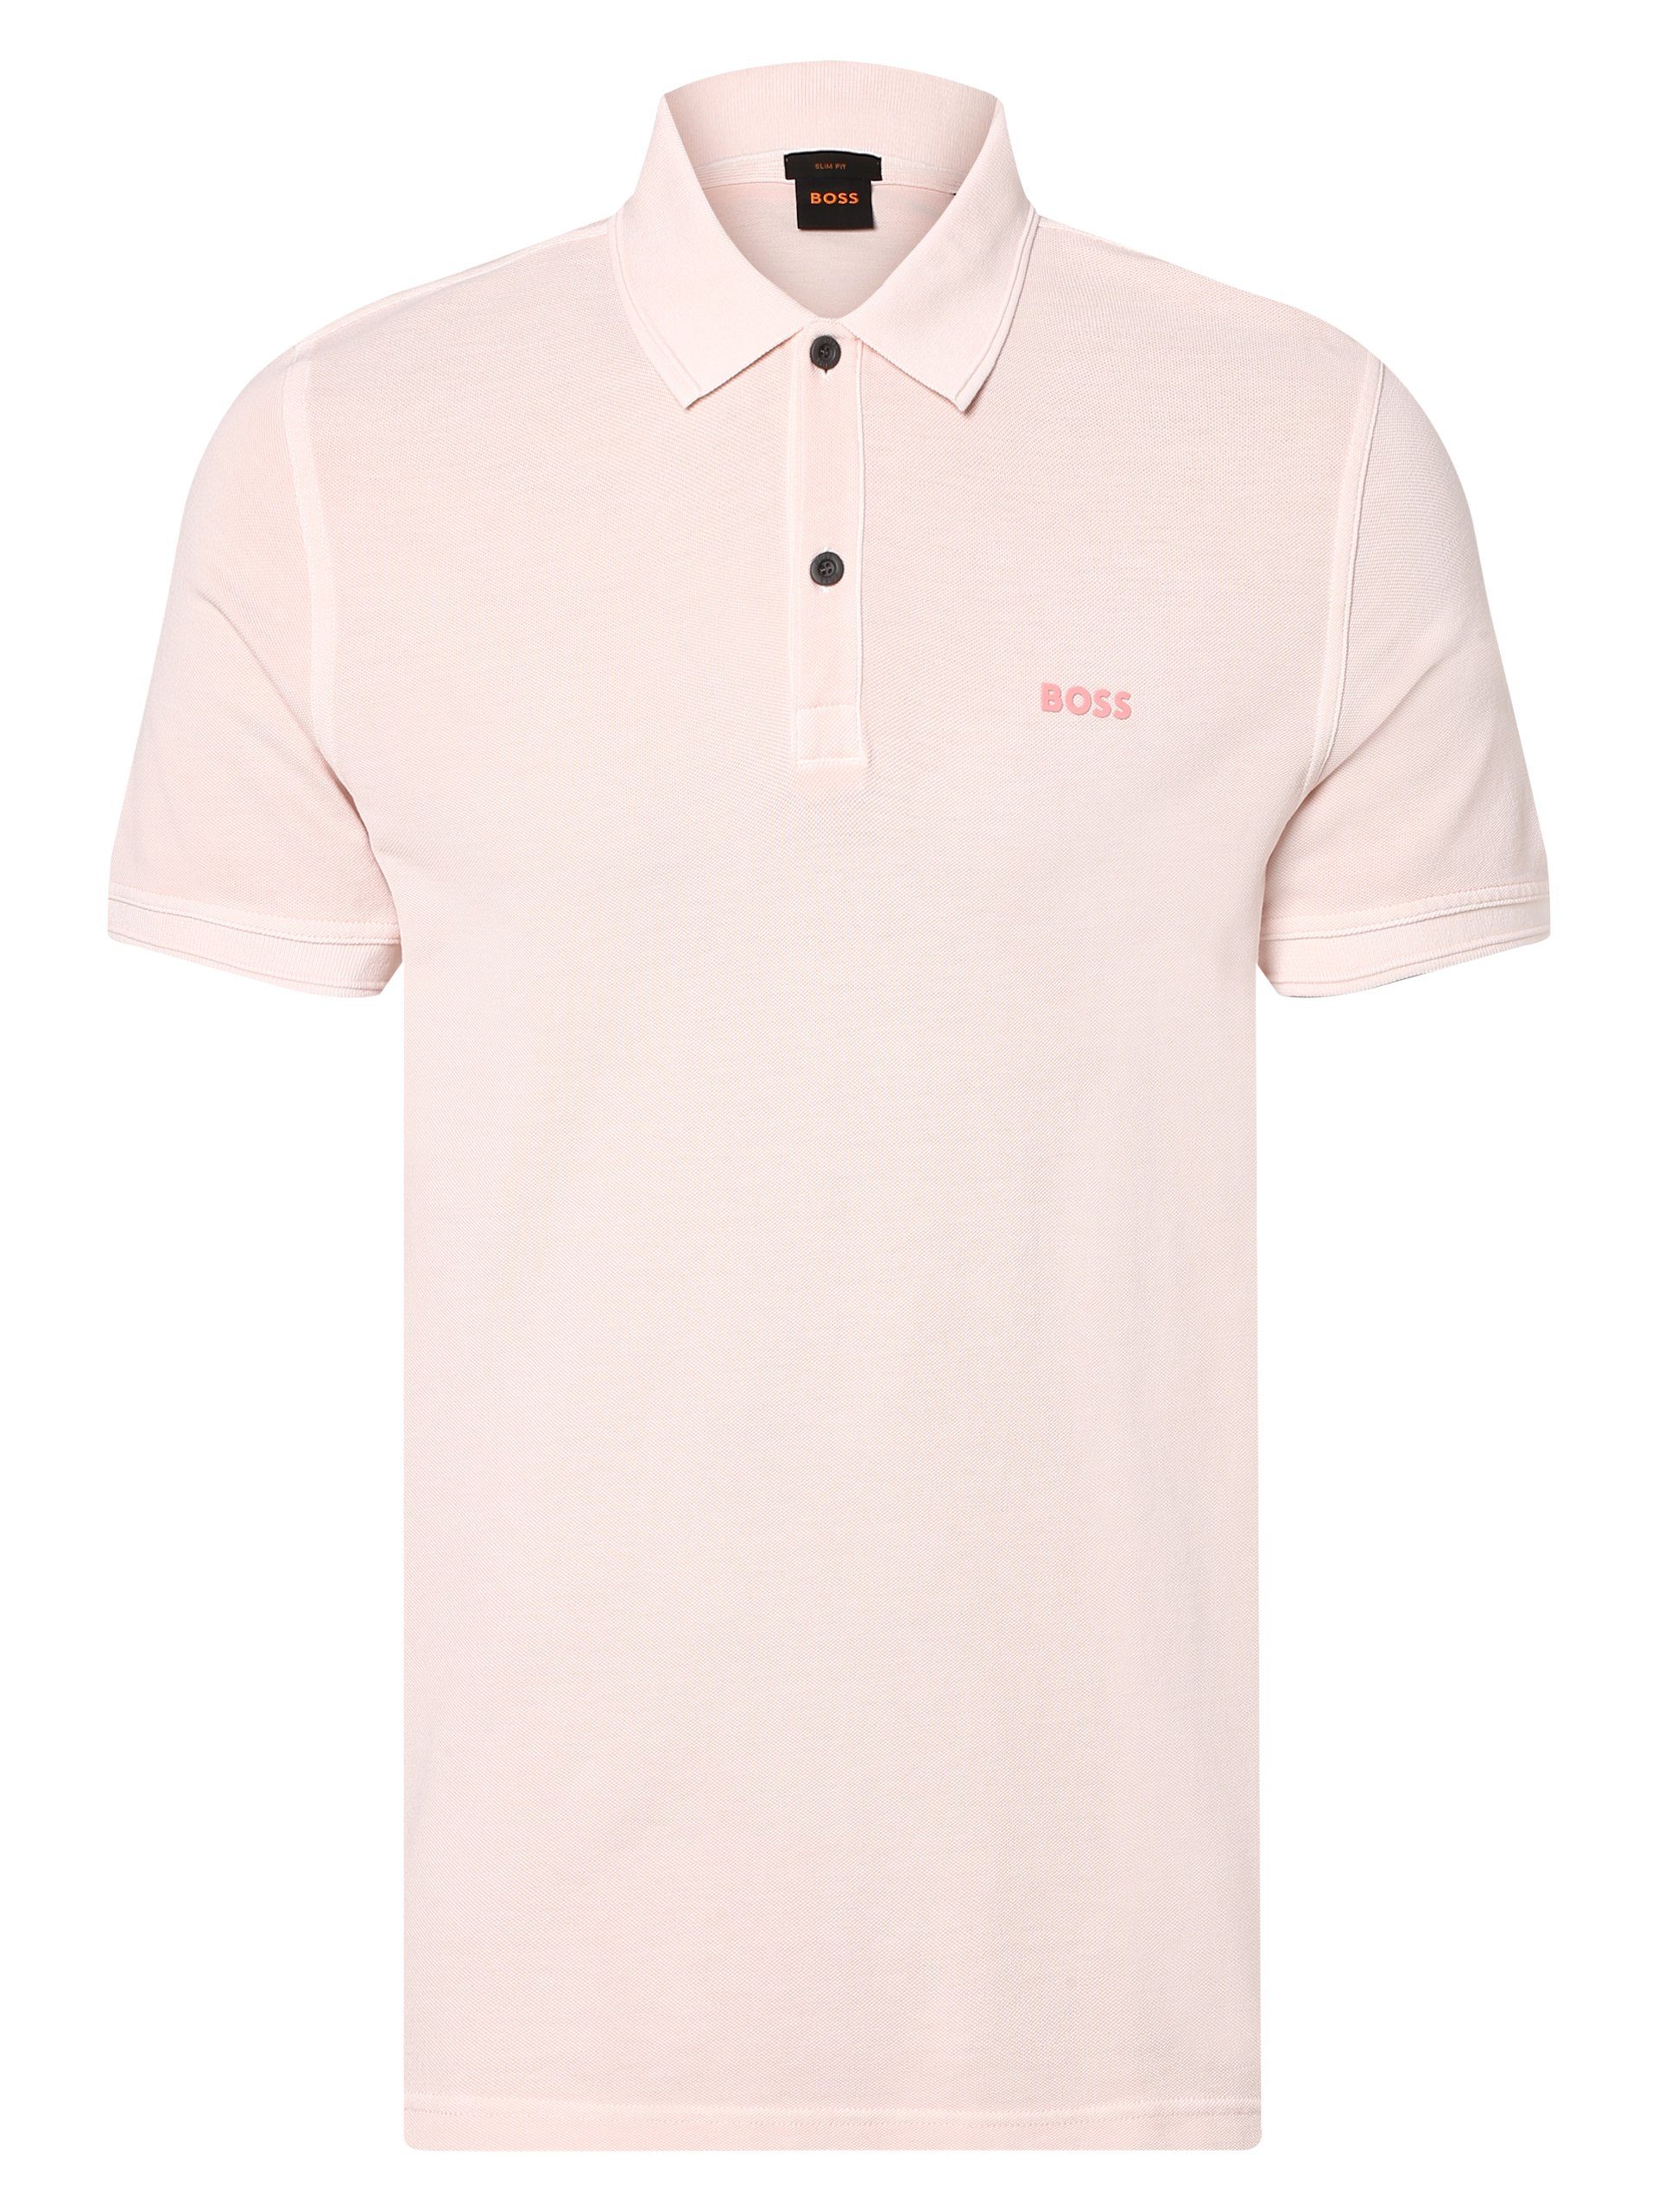 BOSS ORANGE Poloshirt Prime rosa | 